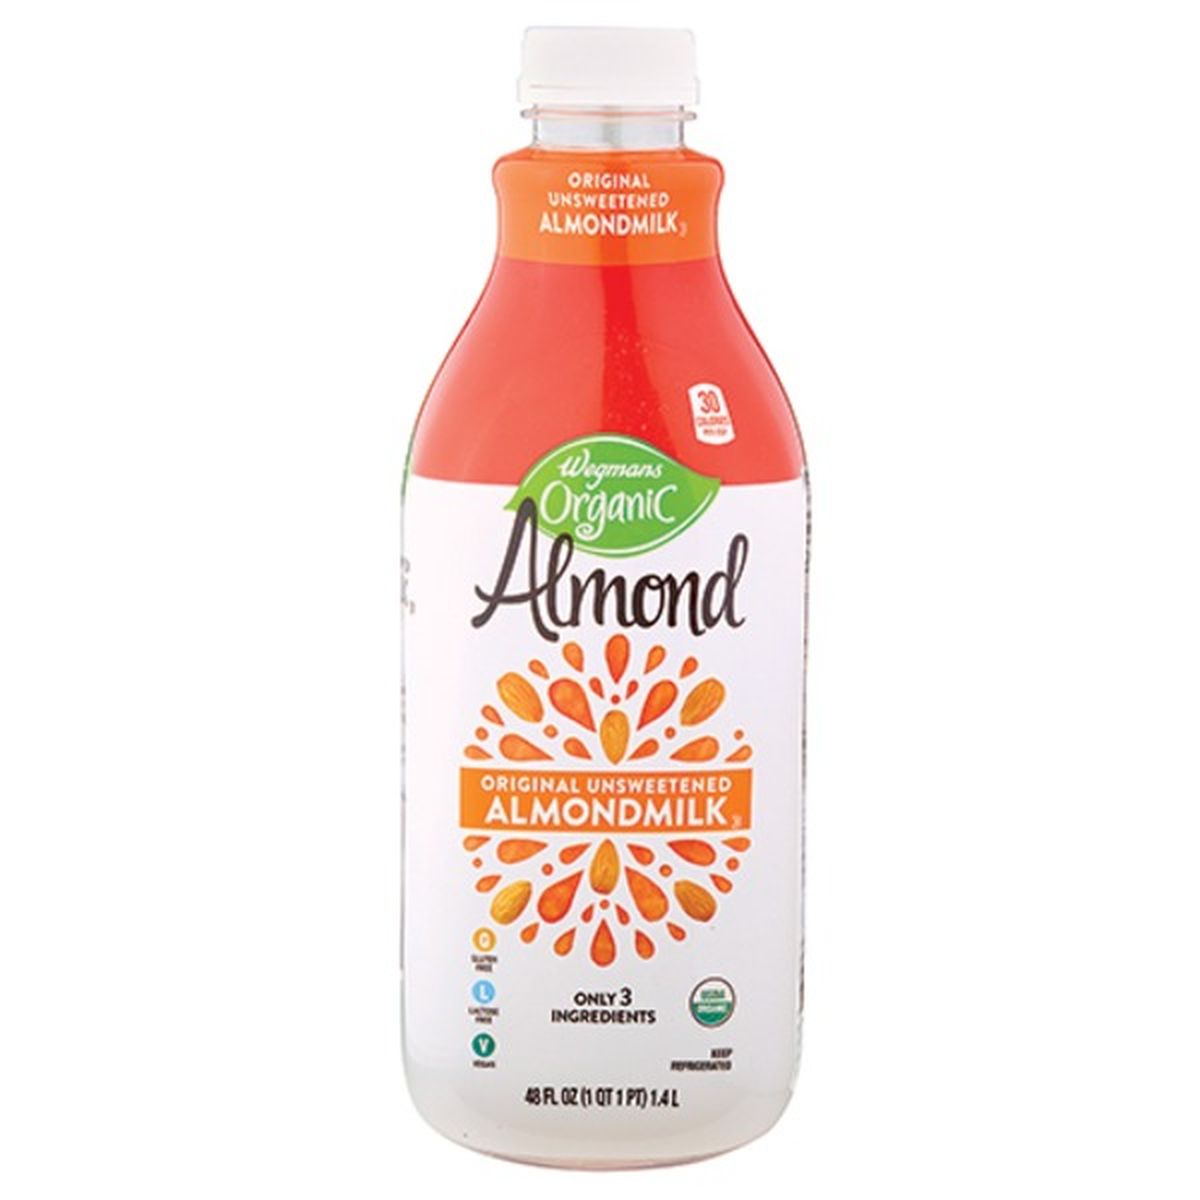 Calories in Wegmans Organic Almondmilk, Original Unsweetened